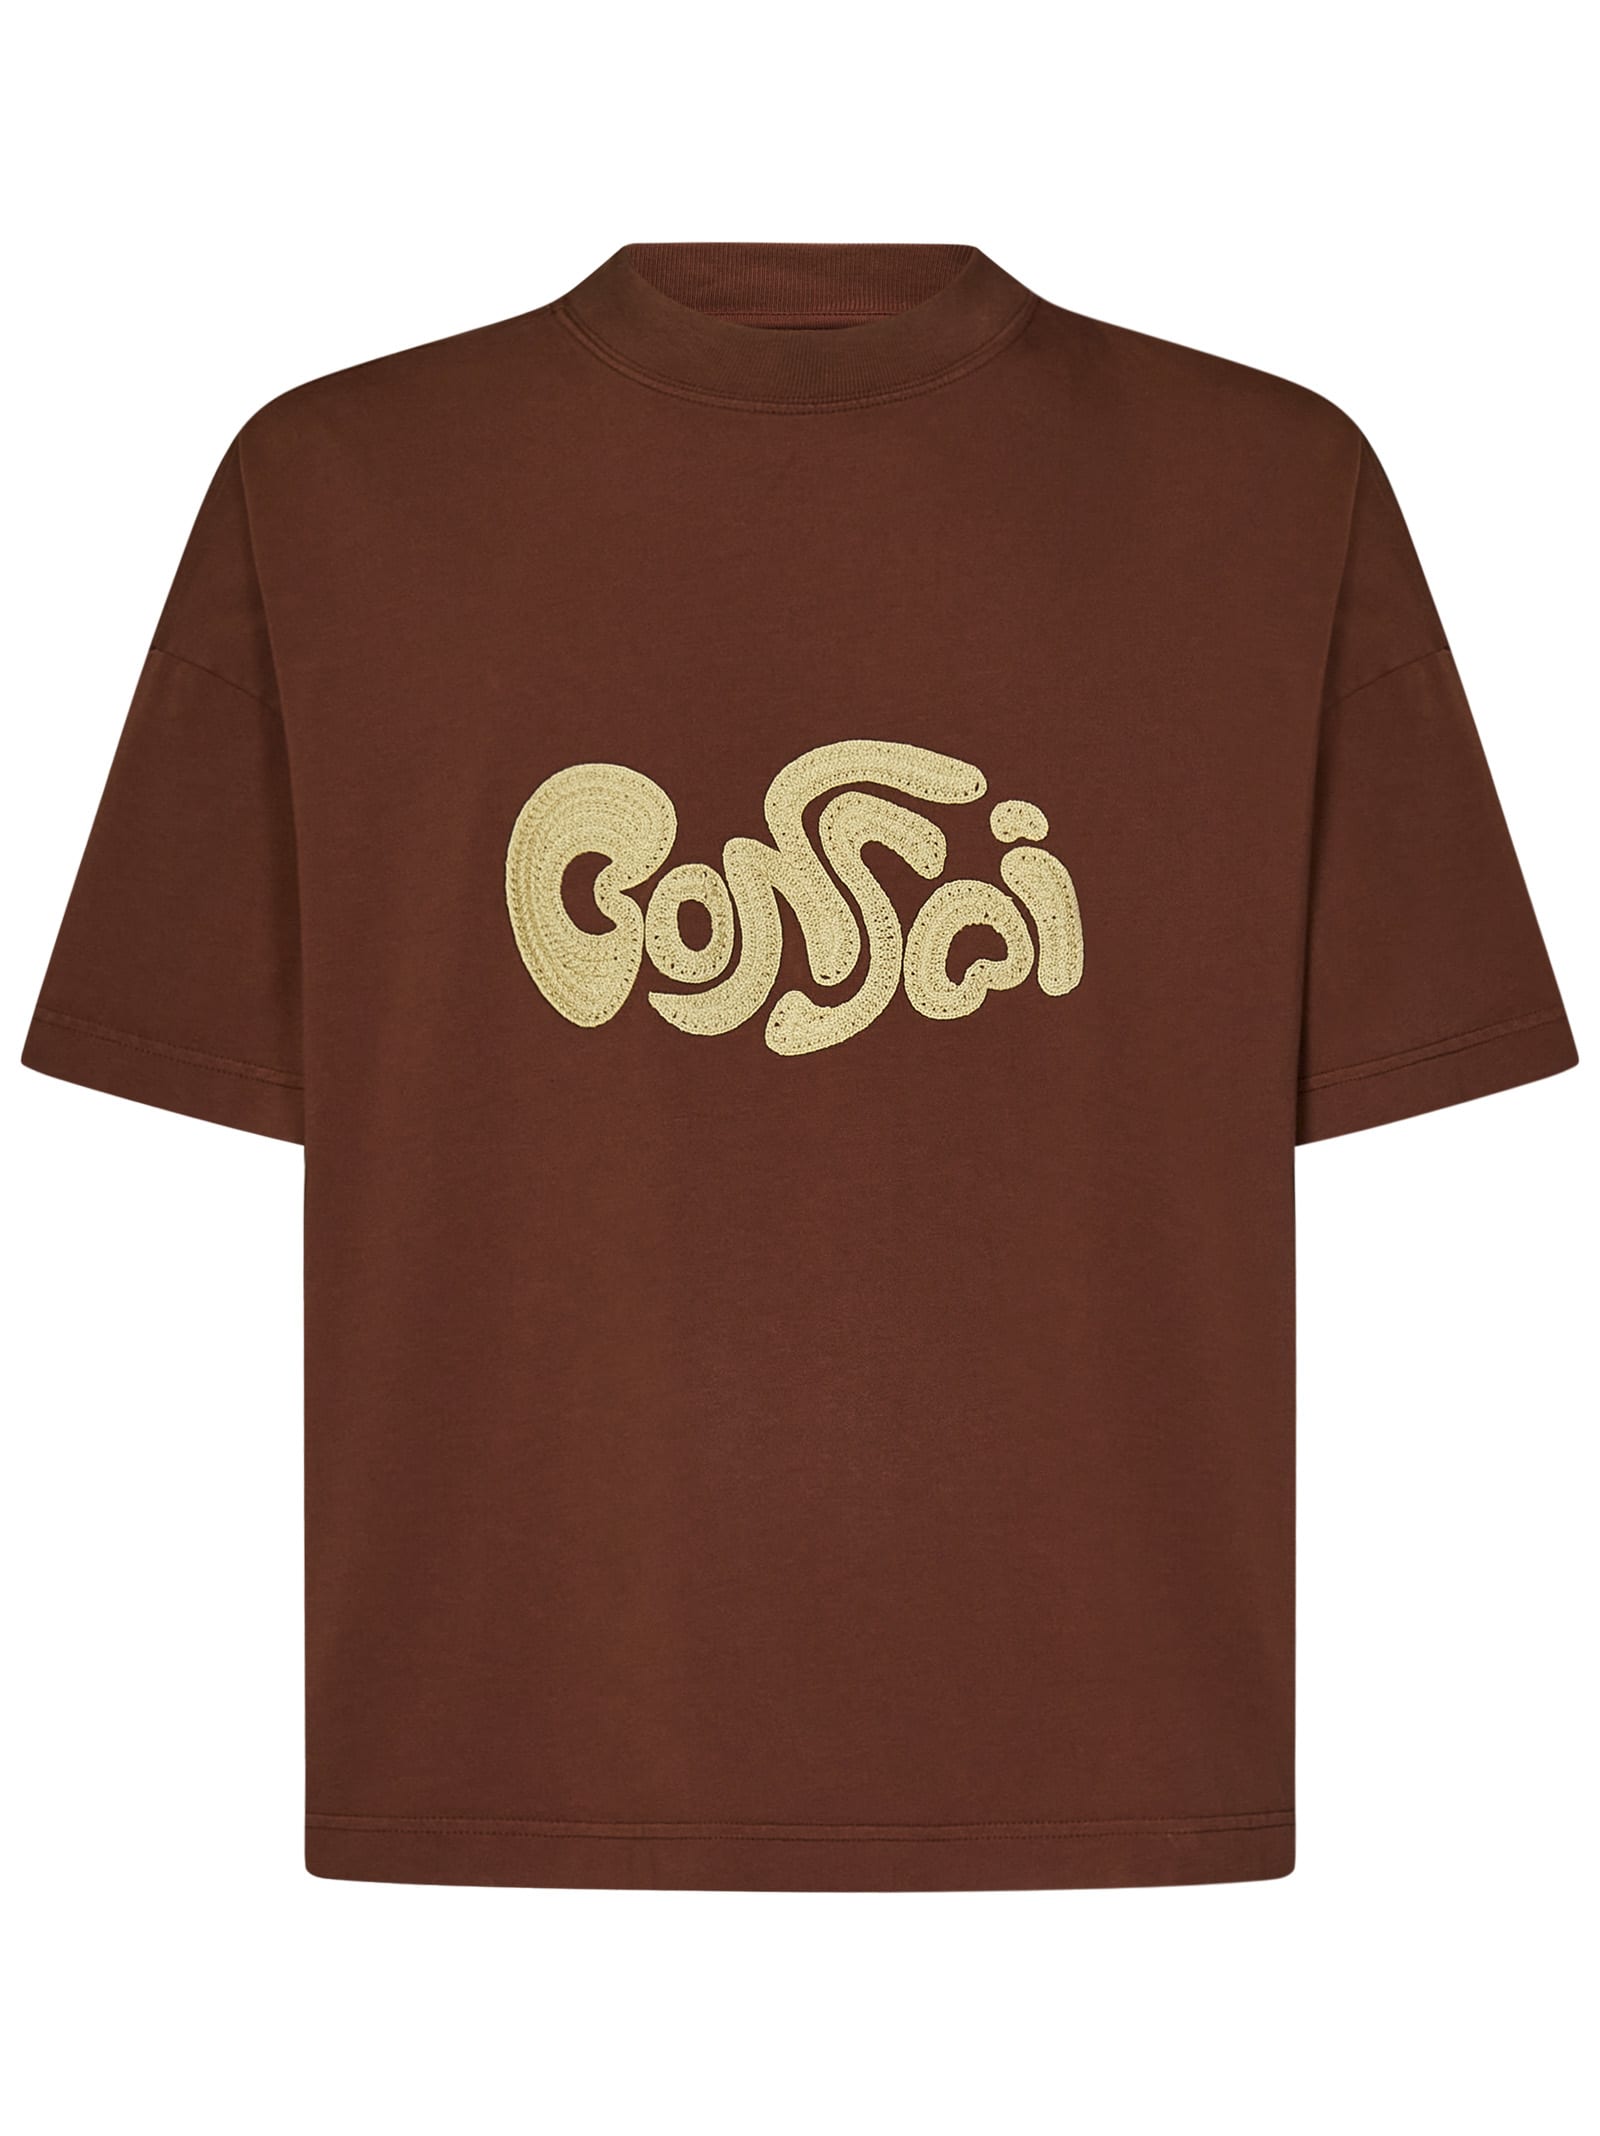 Bonsai T-shirt